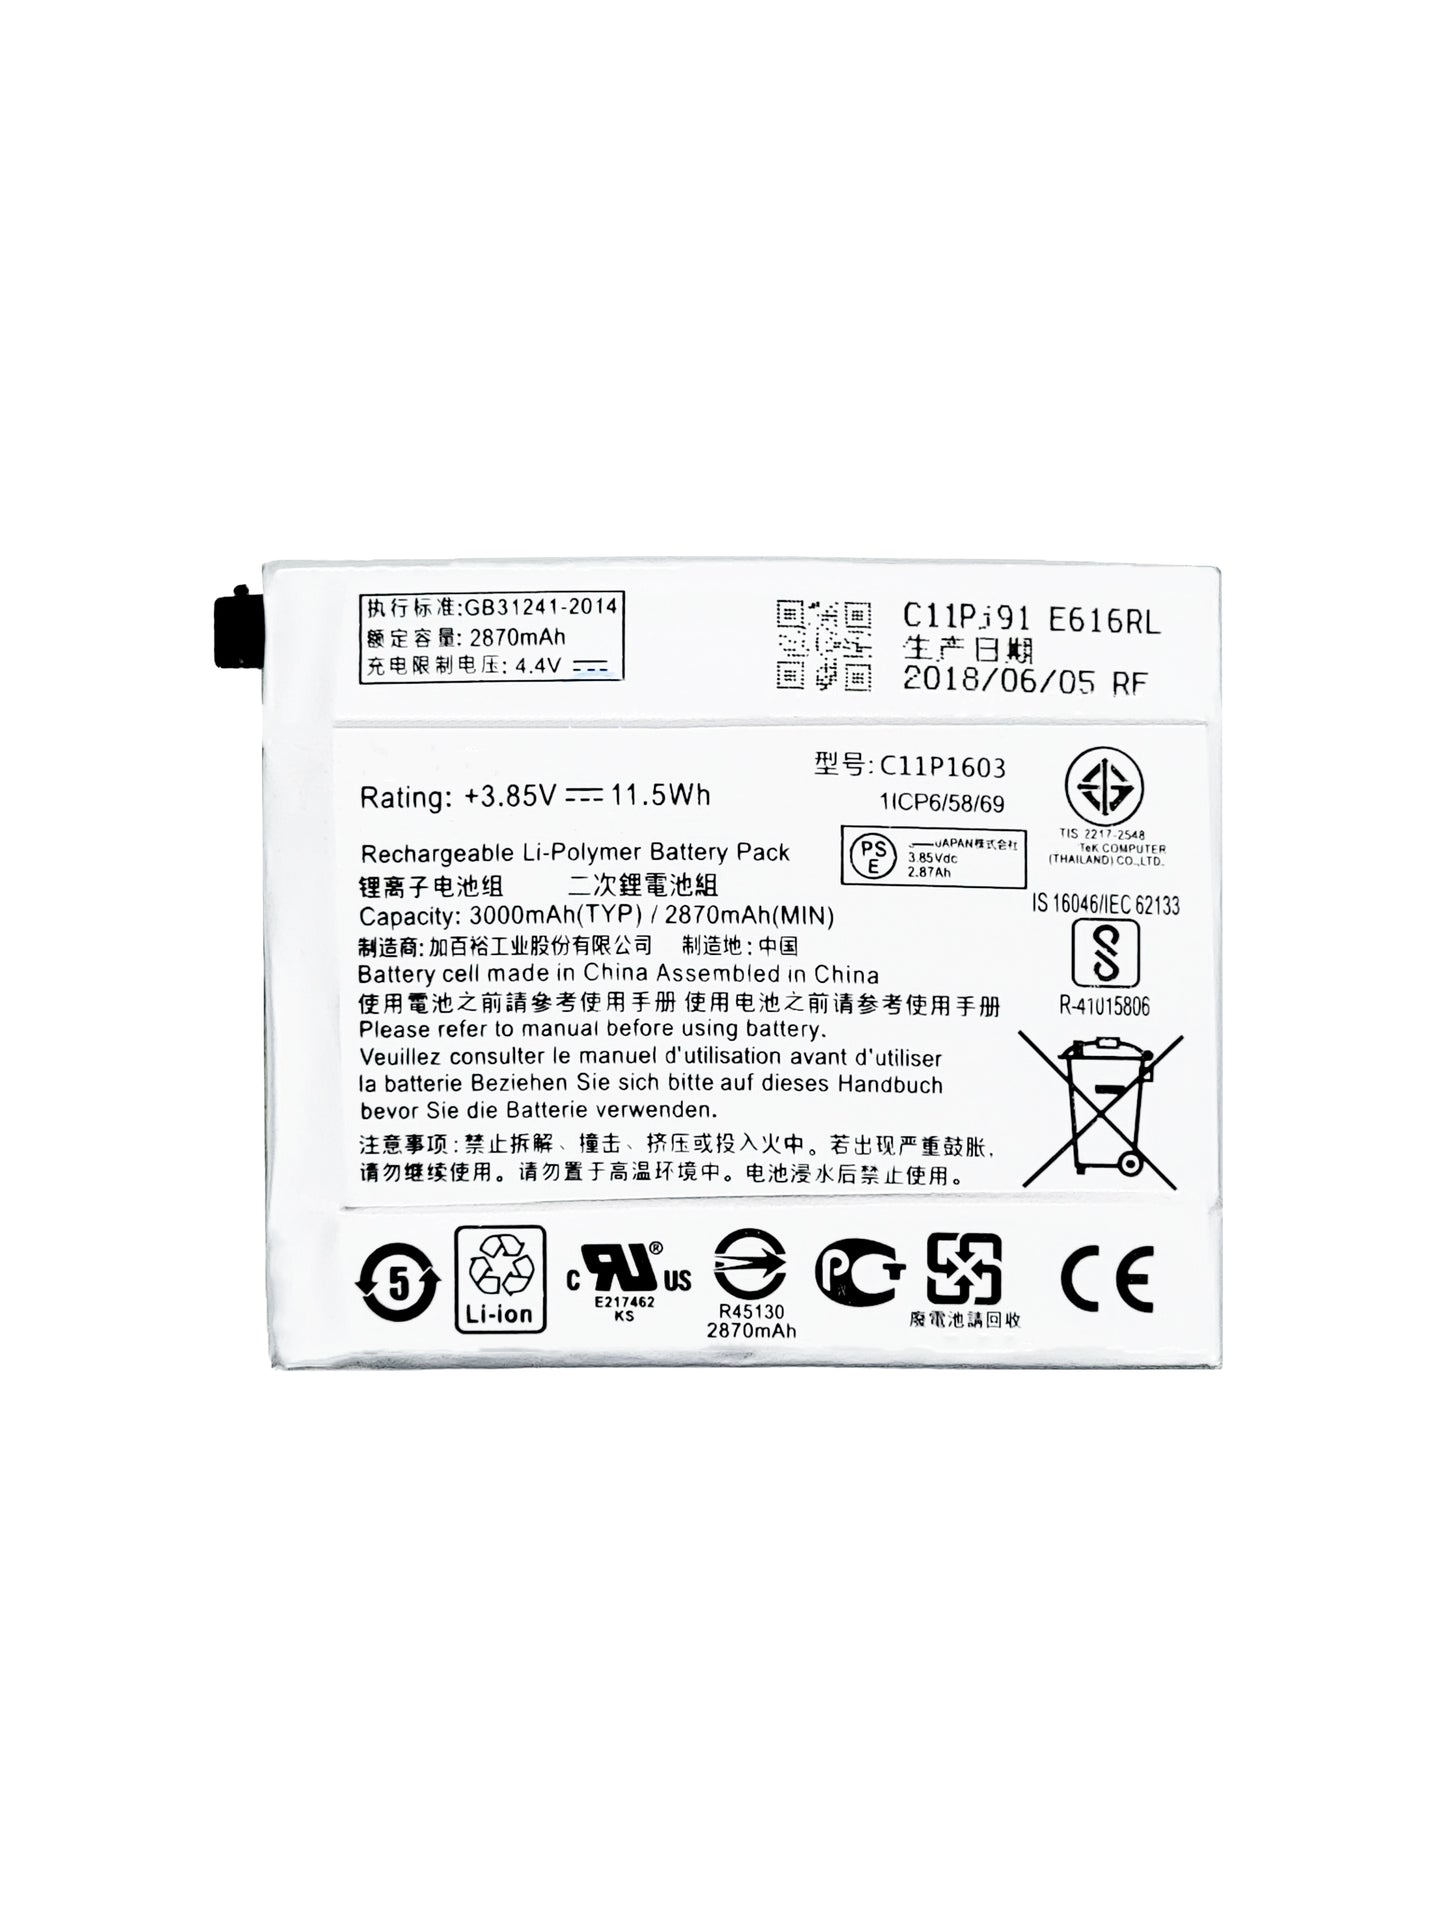 Zenfone 3 Deluxe Battery (ZS570KL / ZS550KL / Z016D) (C11P1603) (Premium)